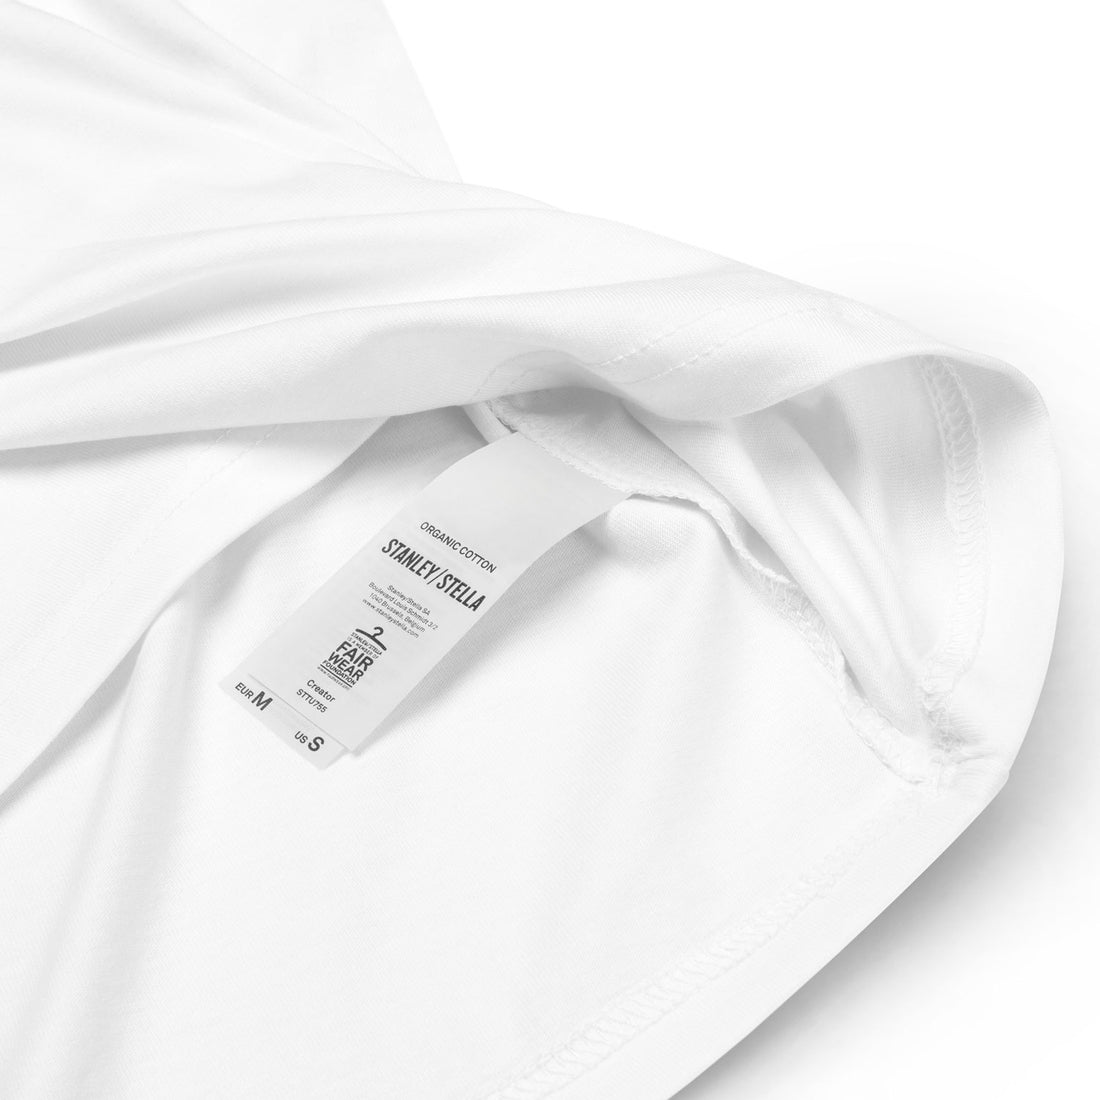 solana merch logo tshirt white